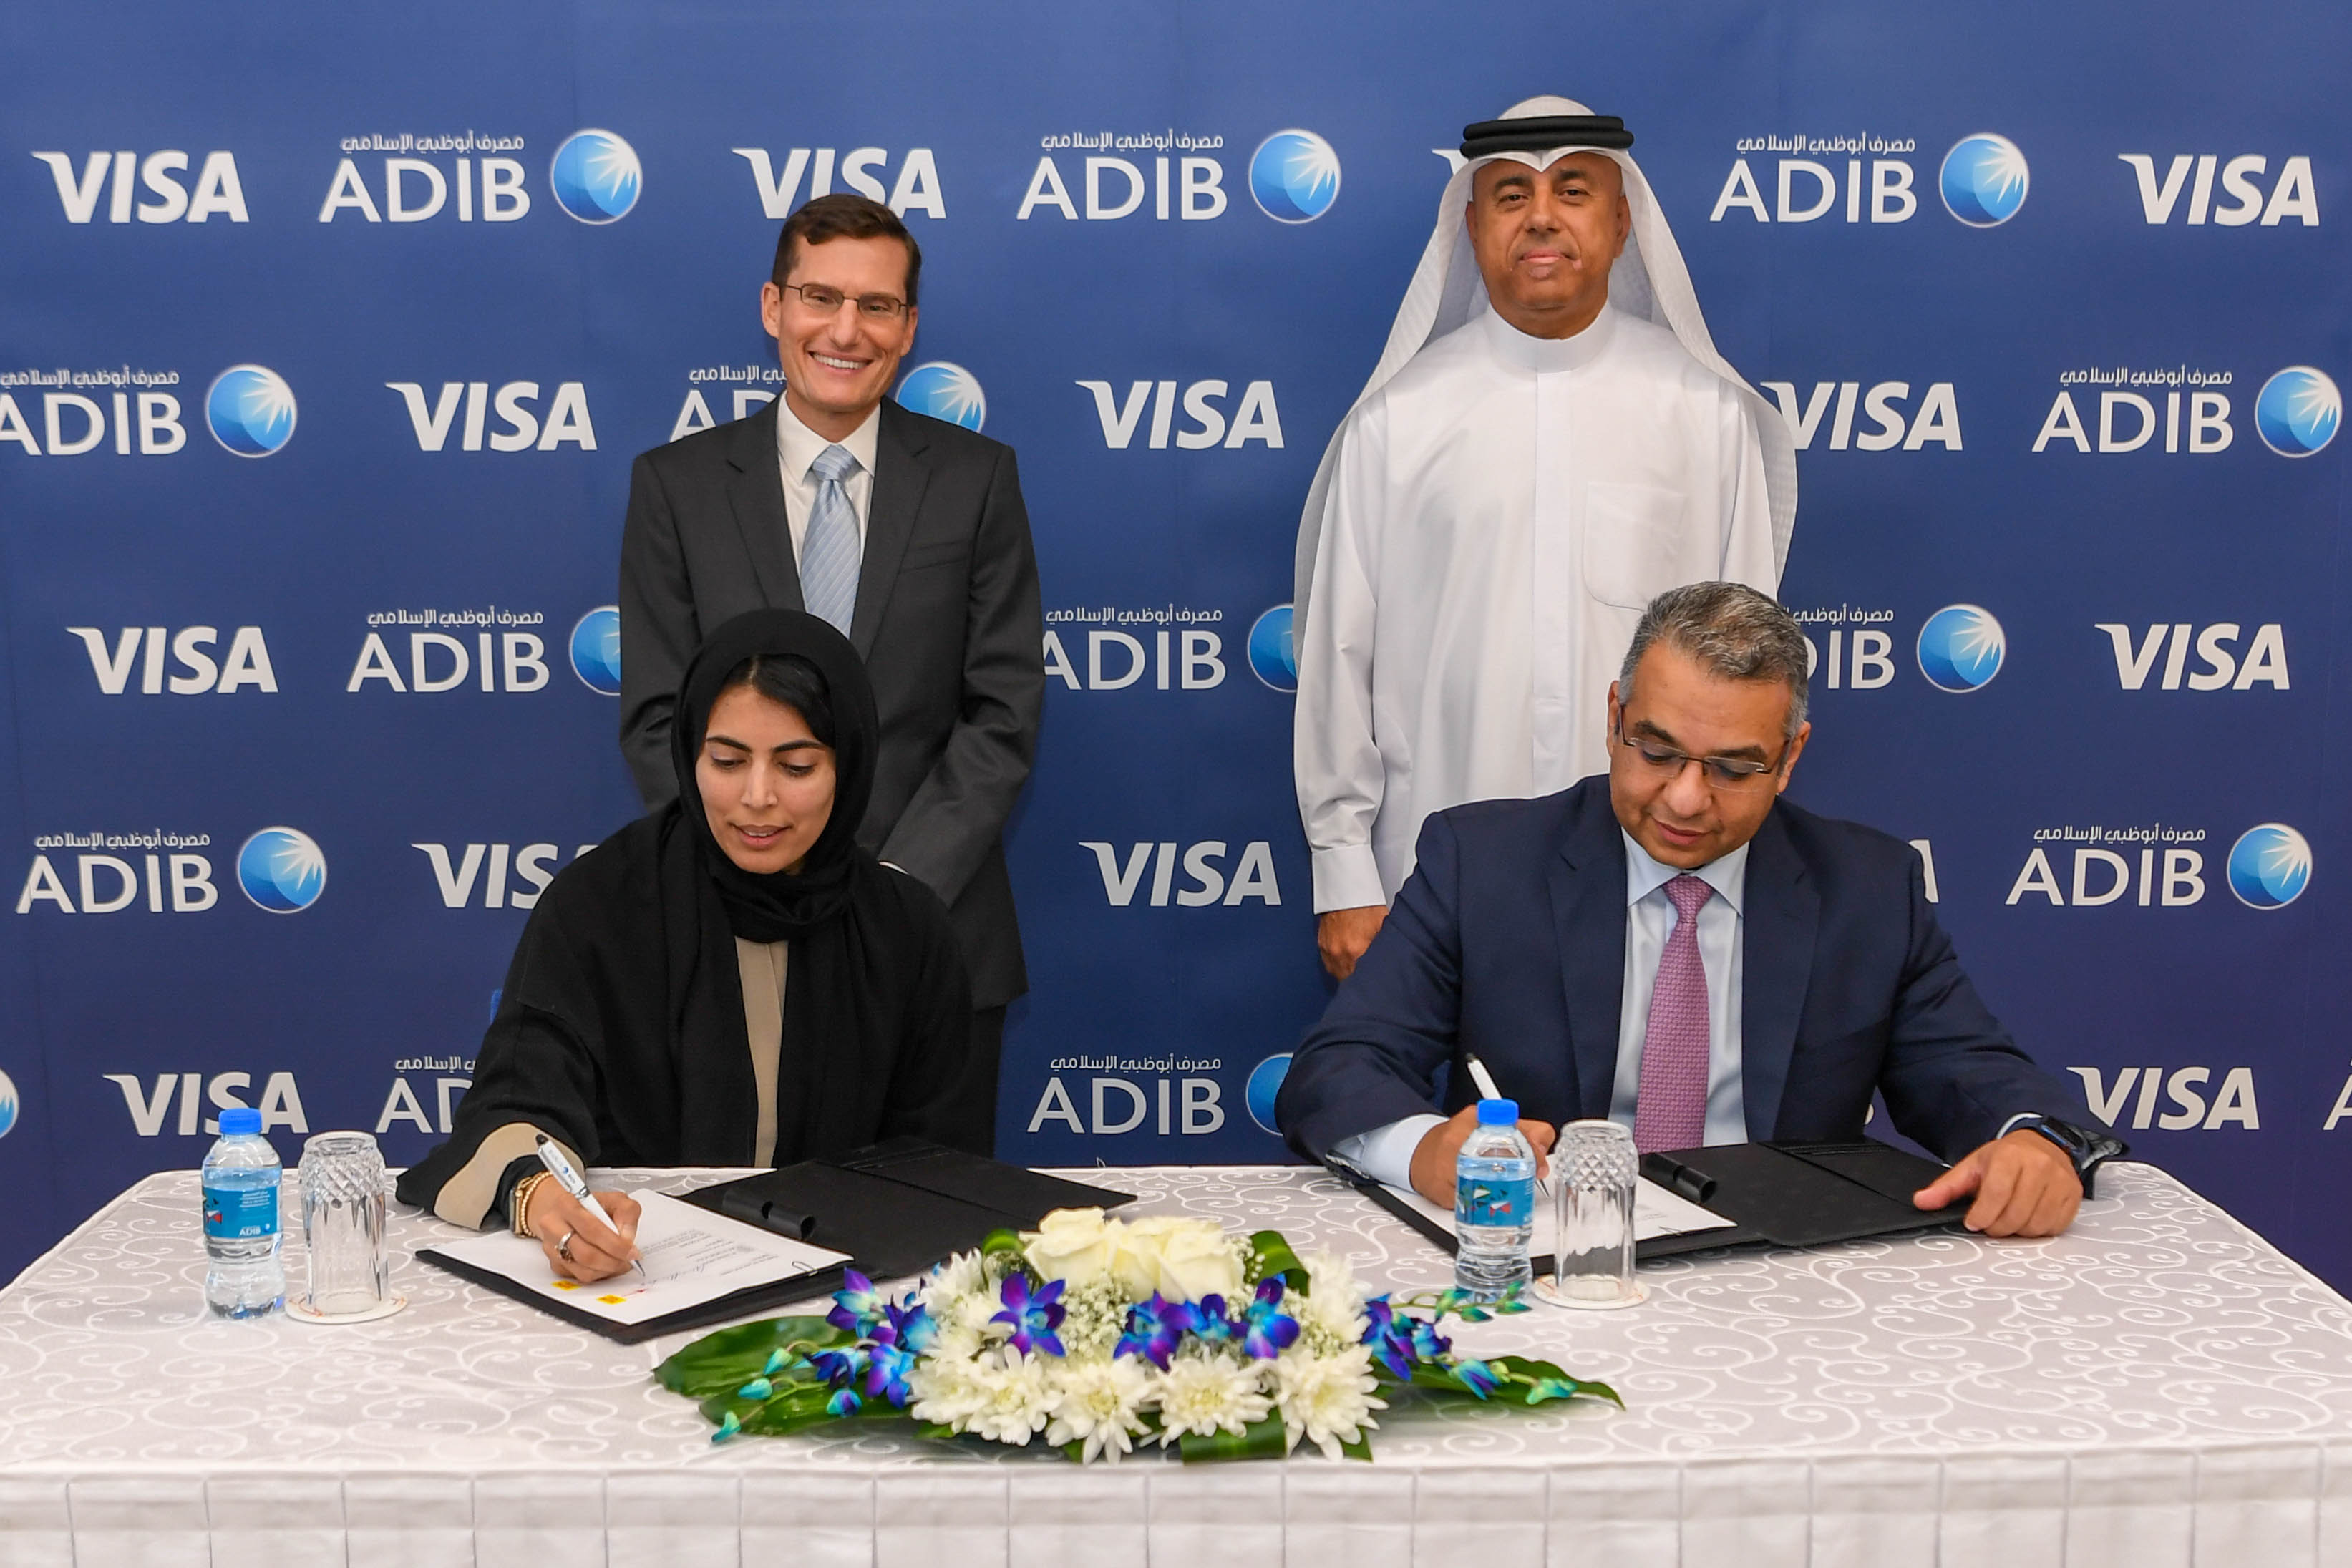 ADIB And Visa Sign Exclusive Partnership Deal